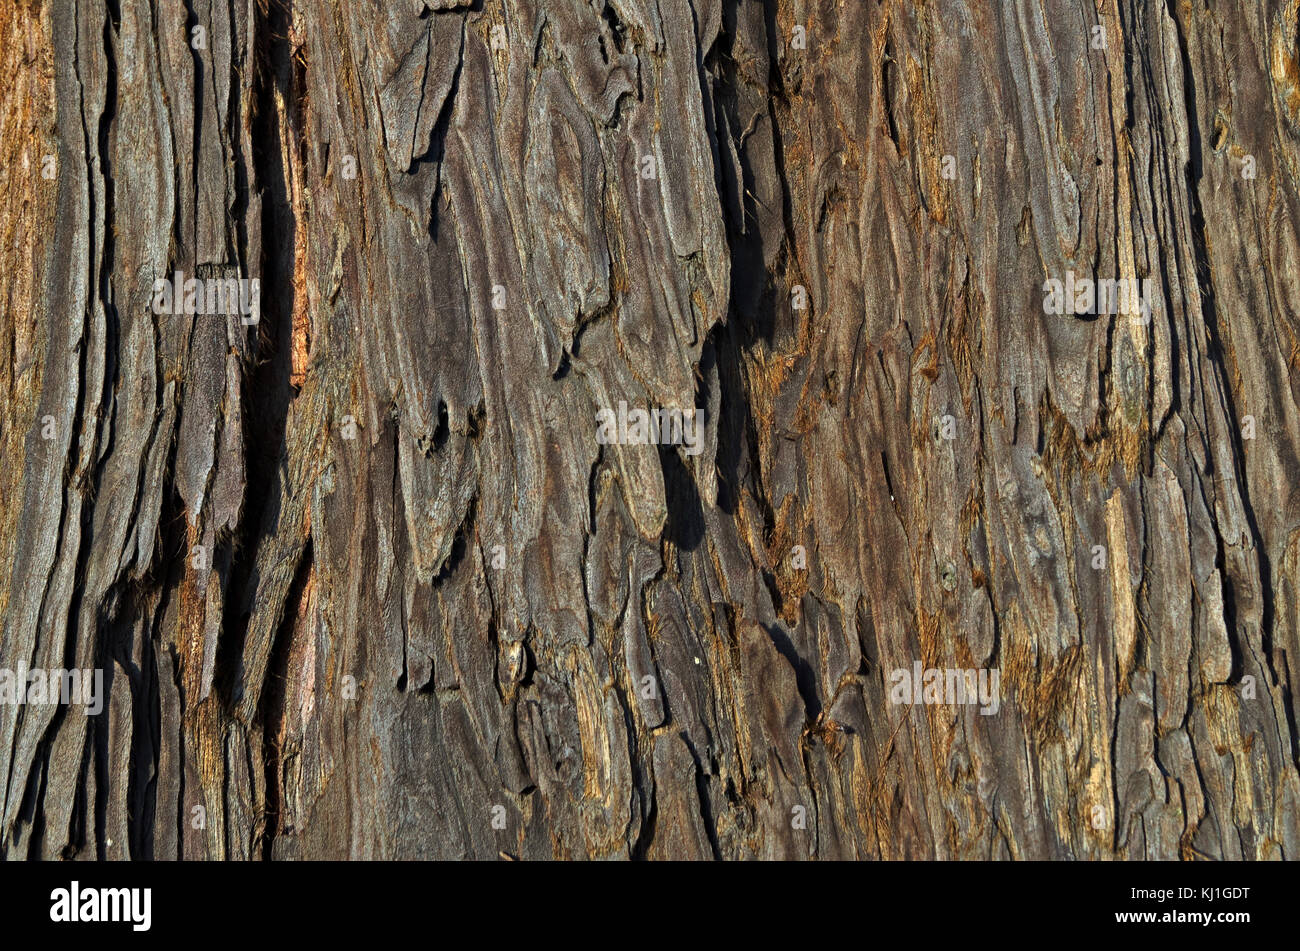 Spanische tanne Rohstoff Holz Textur. abies Pinsapo. Castelo de Vide, Portugal Stockfoto